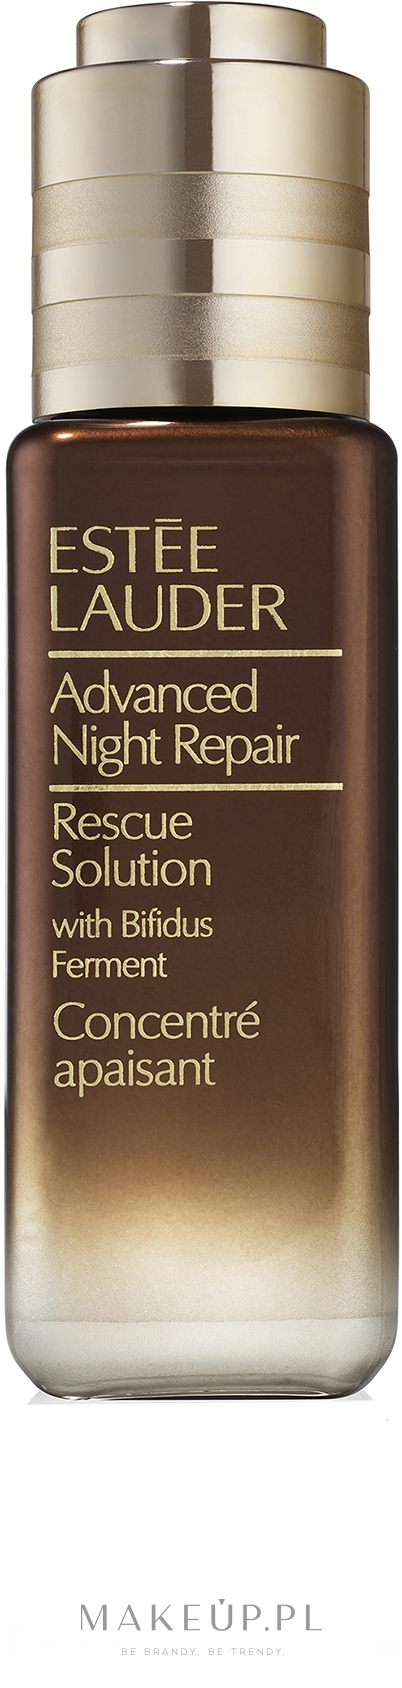 Serum do twarzy - Estee Lauder Advanced Night Repair Rescue Solution Serum with 15% Bifidus Ferment — Zdjęcie 20 ml